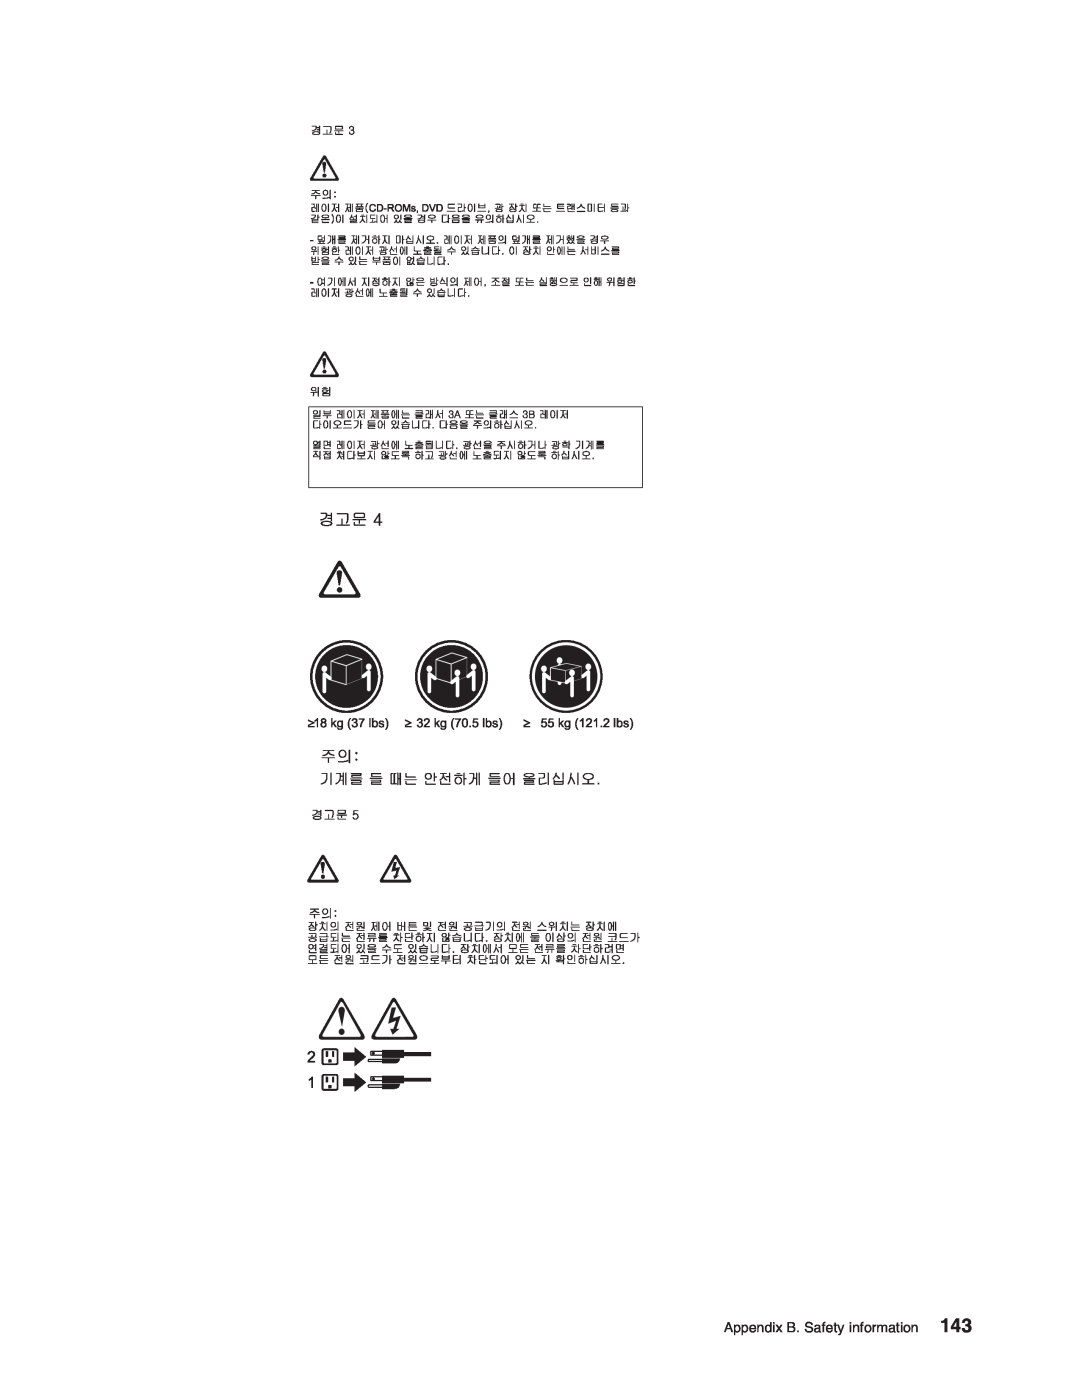 IBM HS40 manual Appendix B. Safety information 